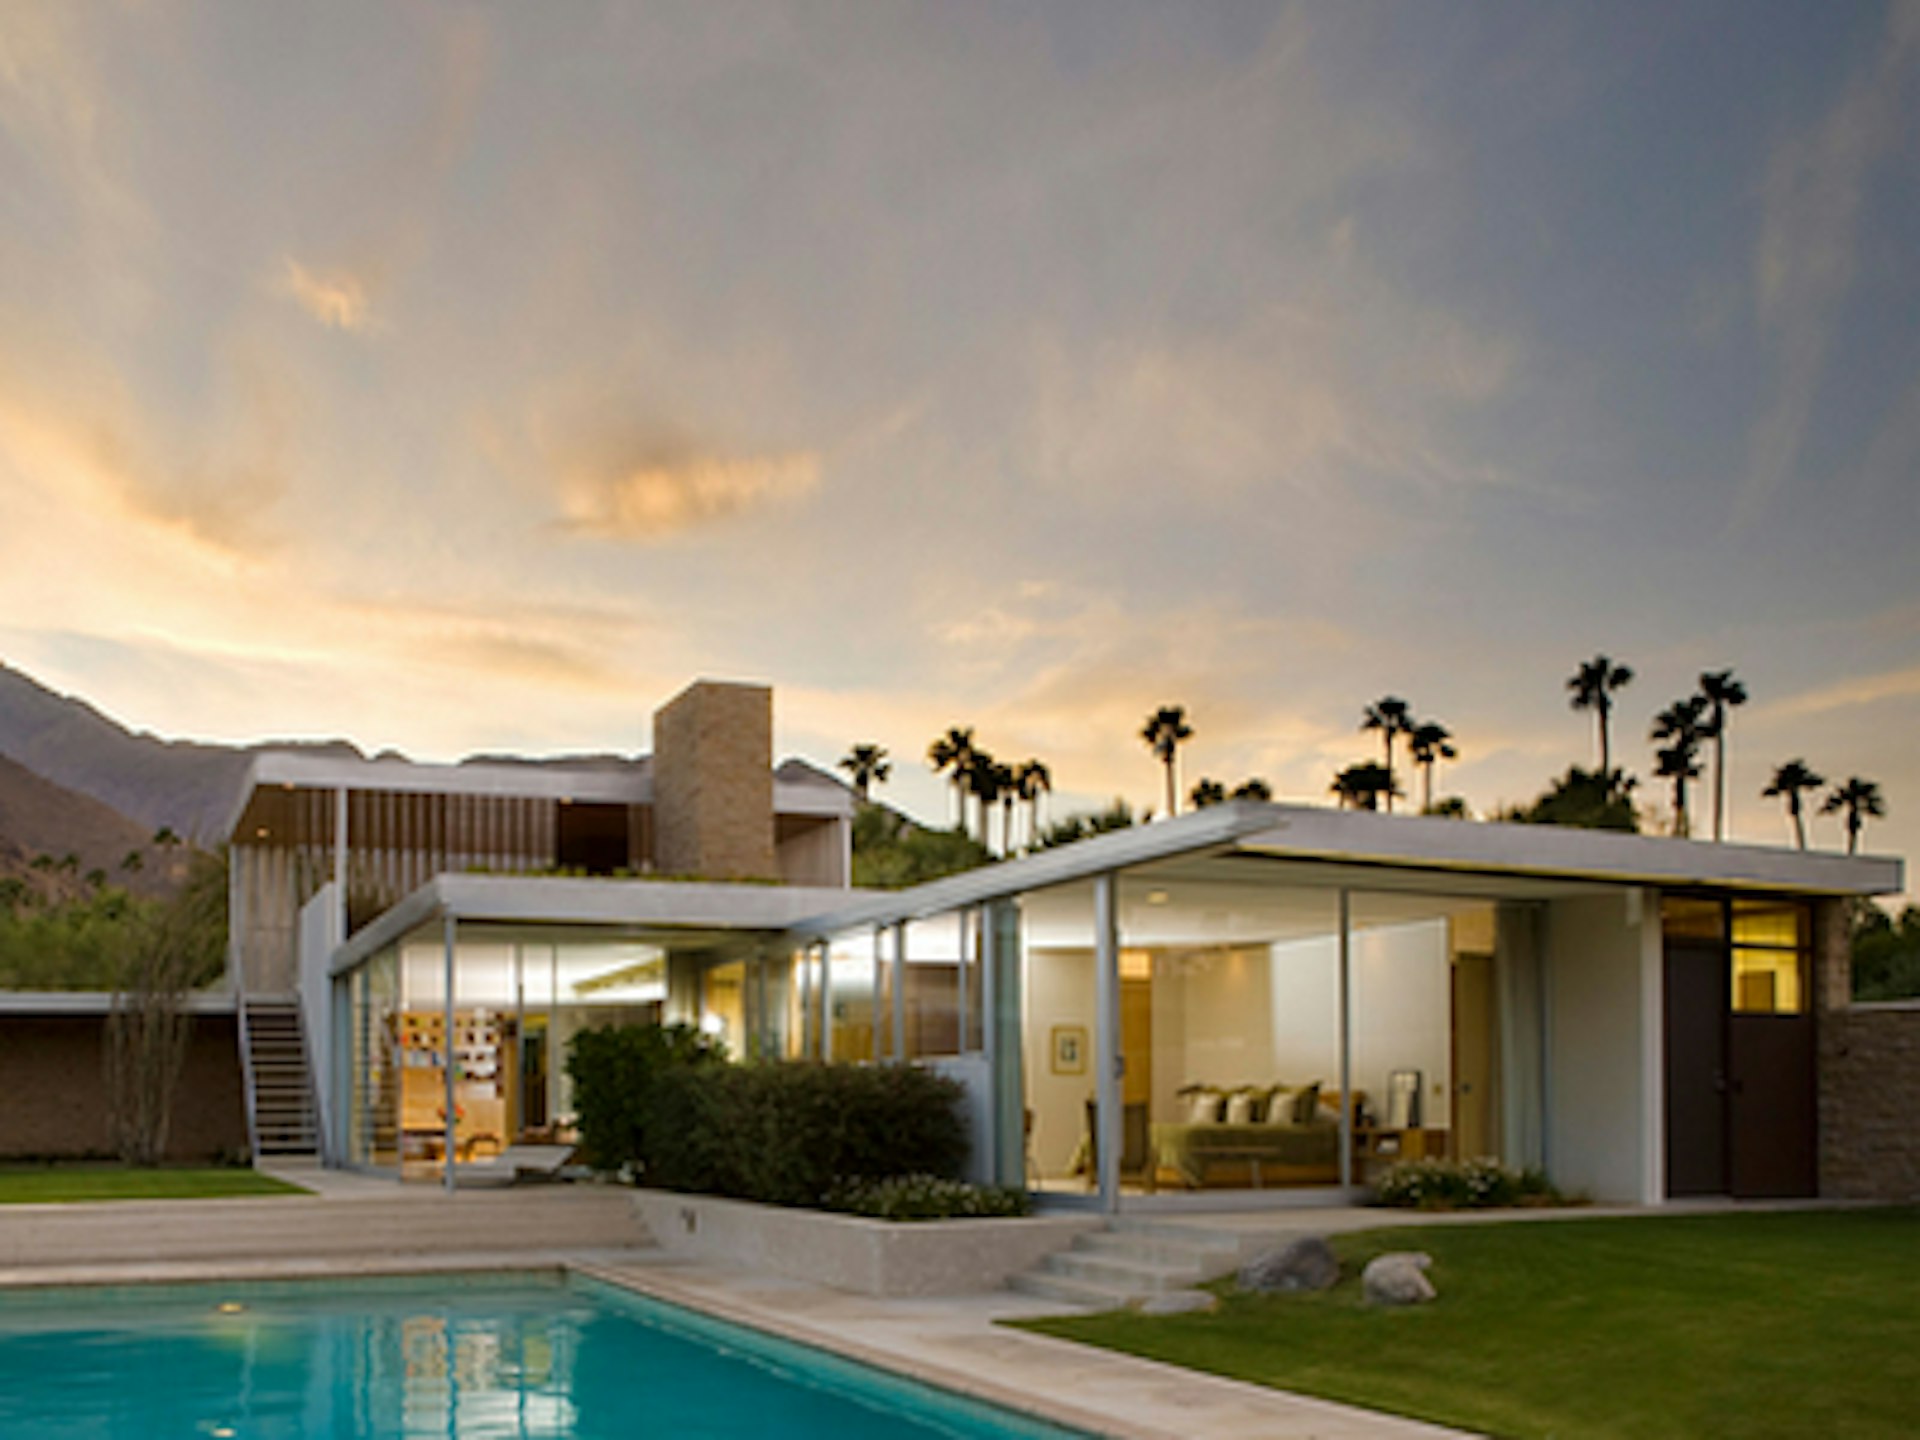 Kaufmann House, Palm Springs, California designed by Richard Neutra, 1946